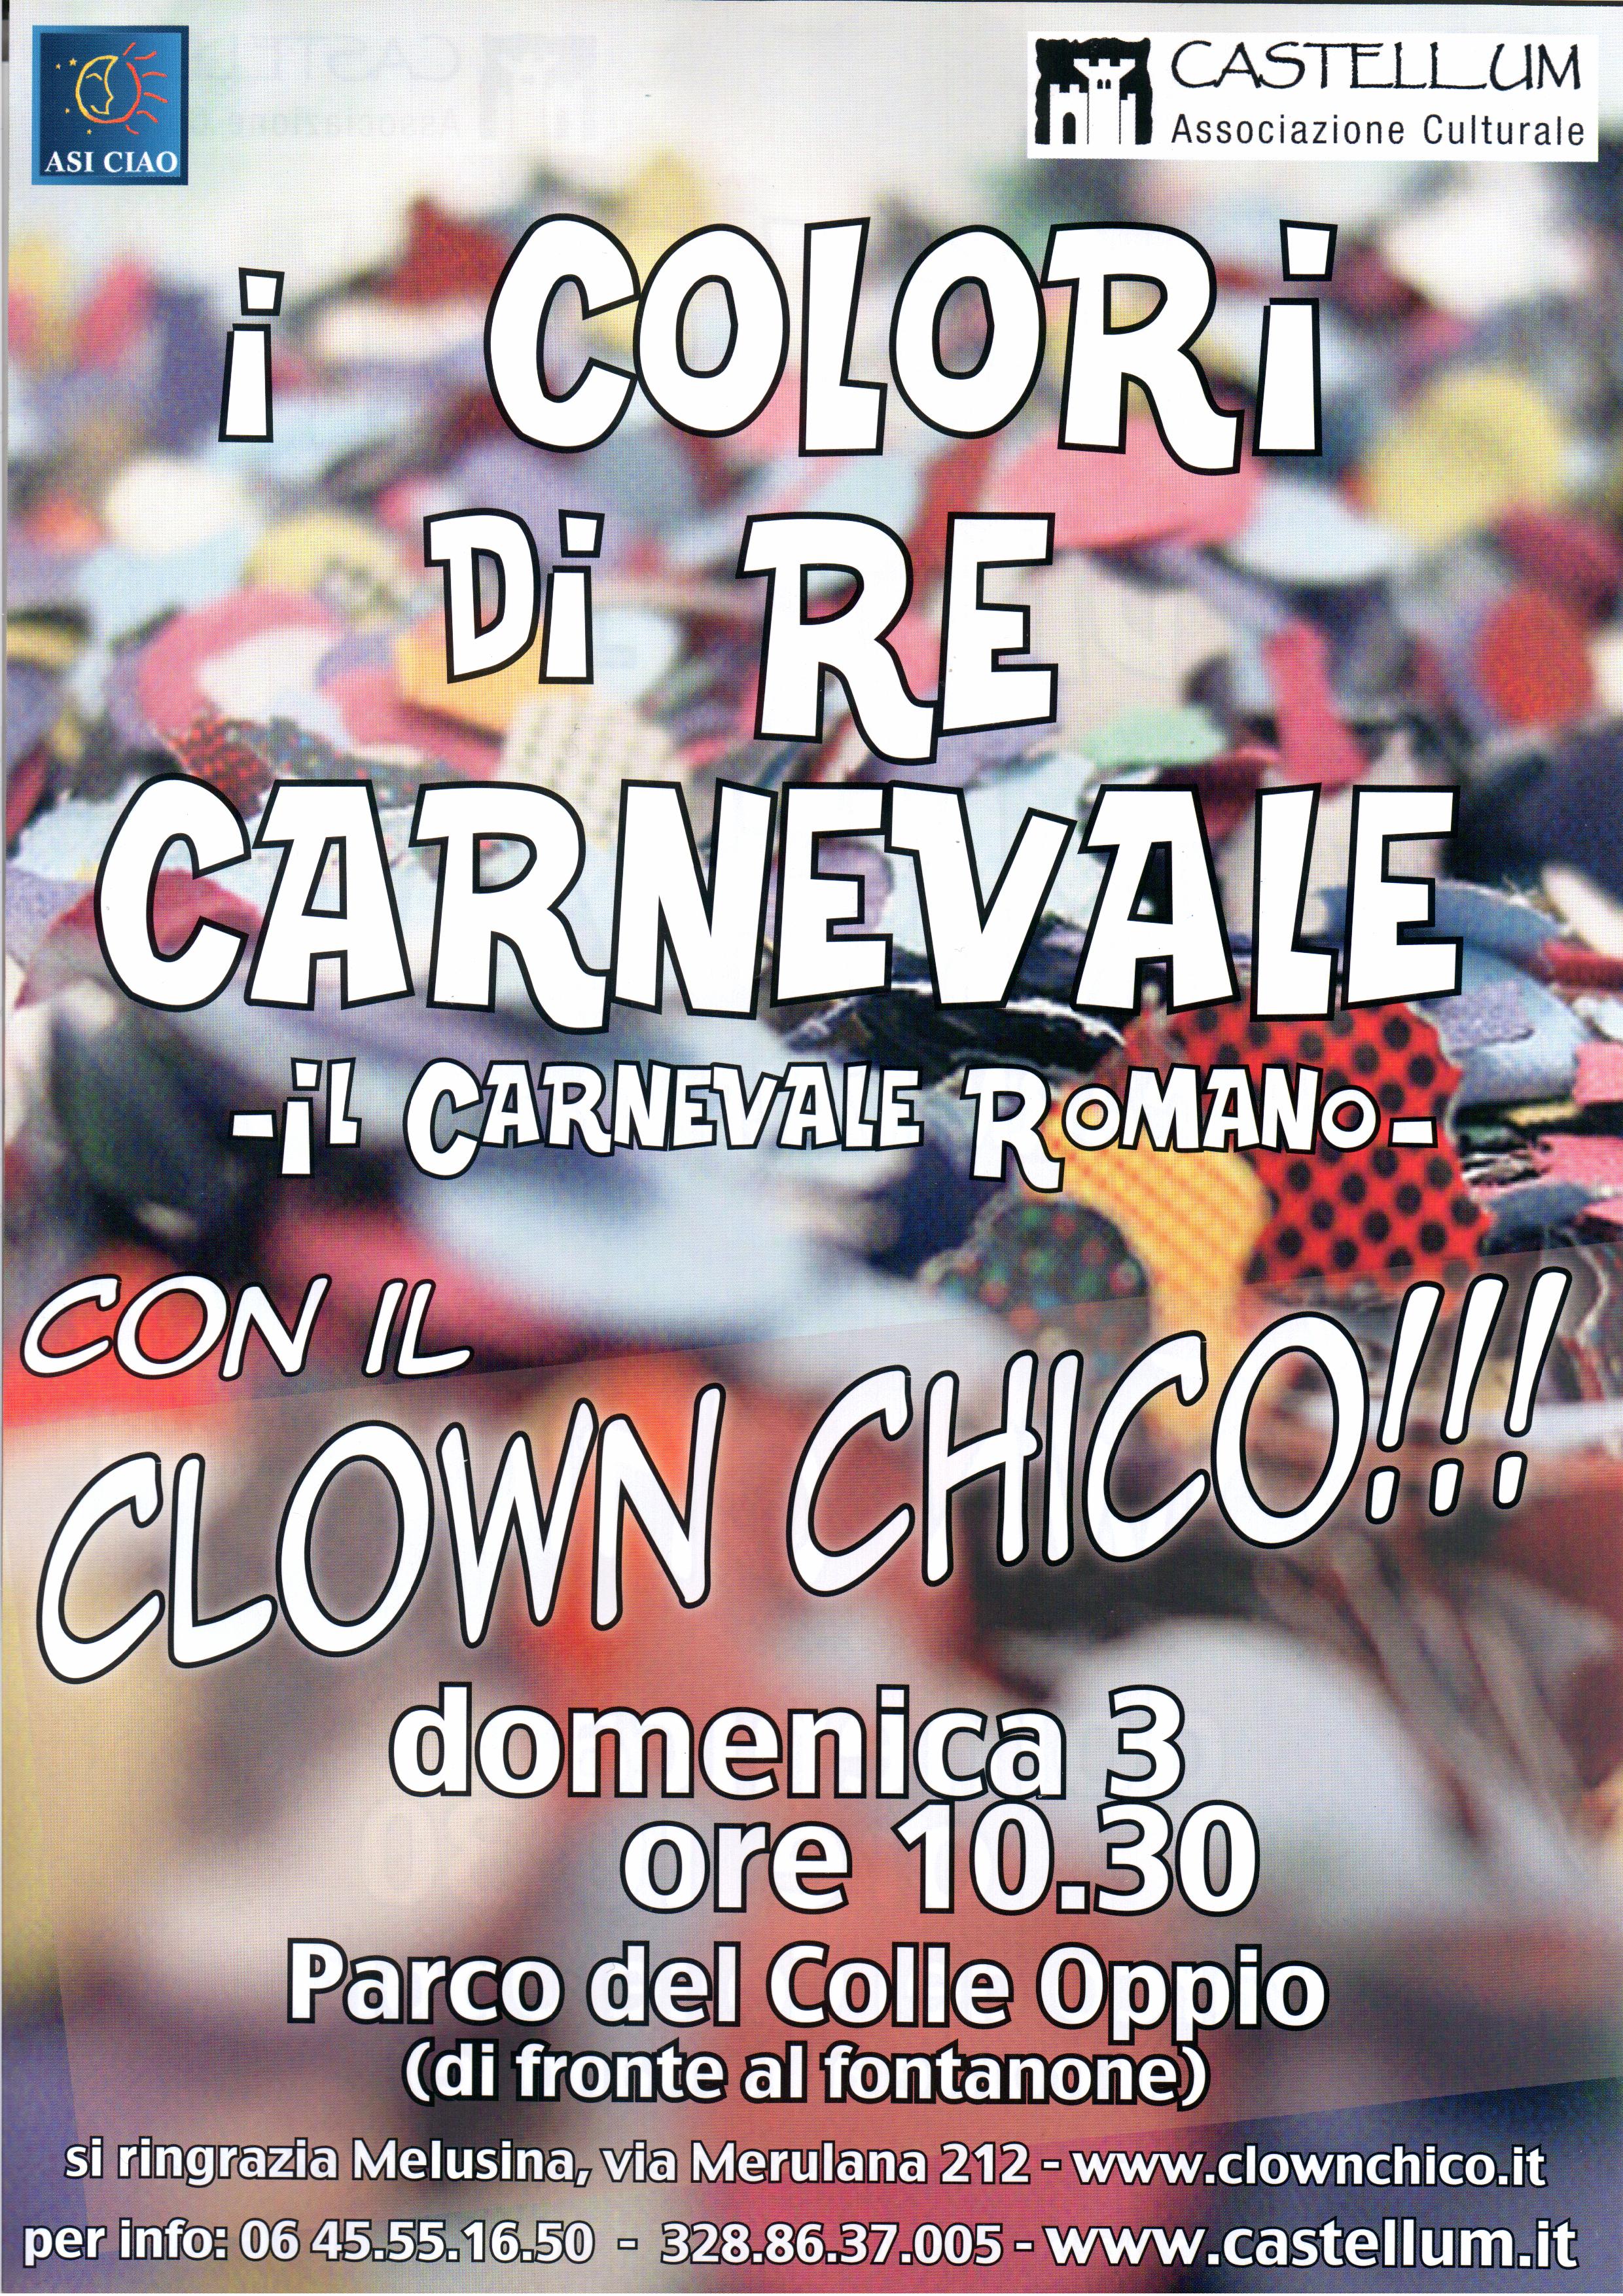 I Colori di Re Carnevale 2008